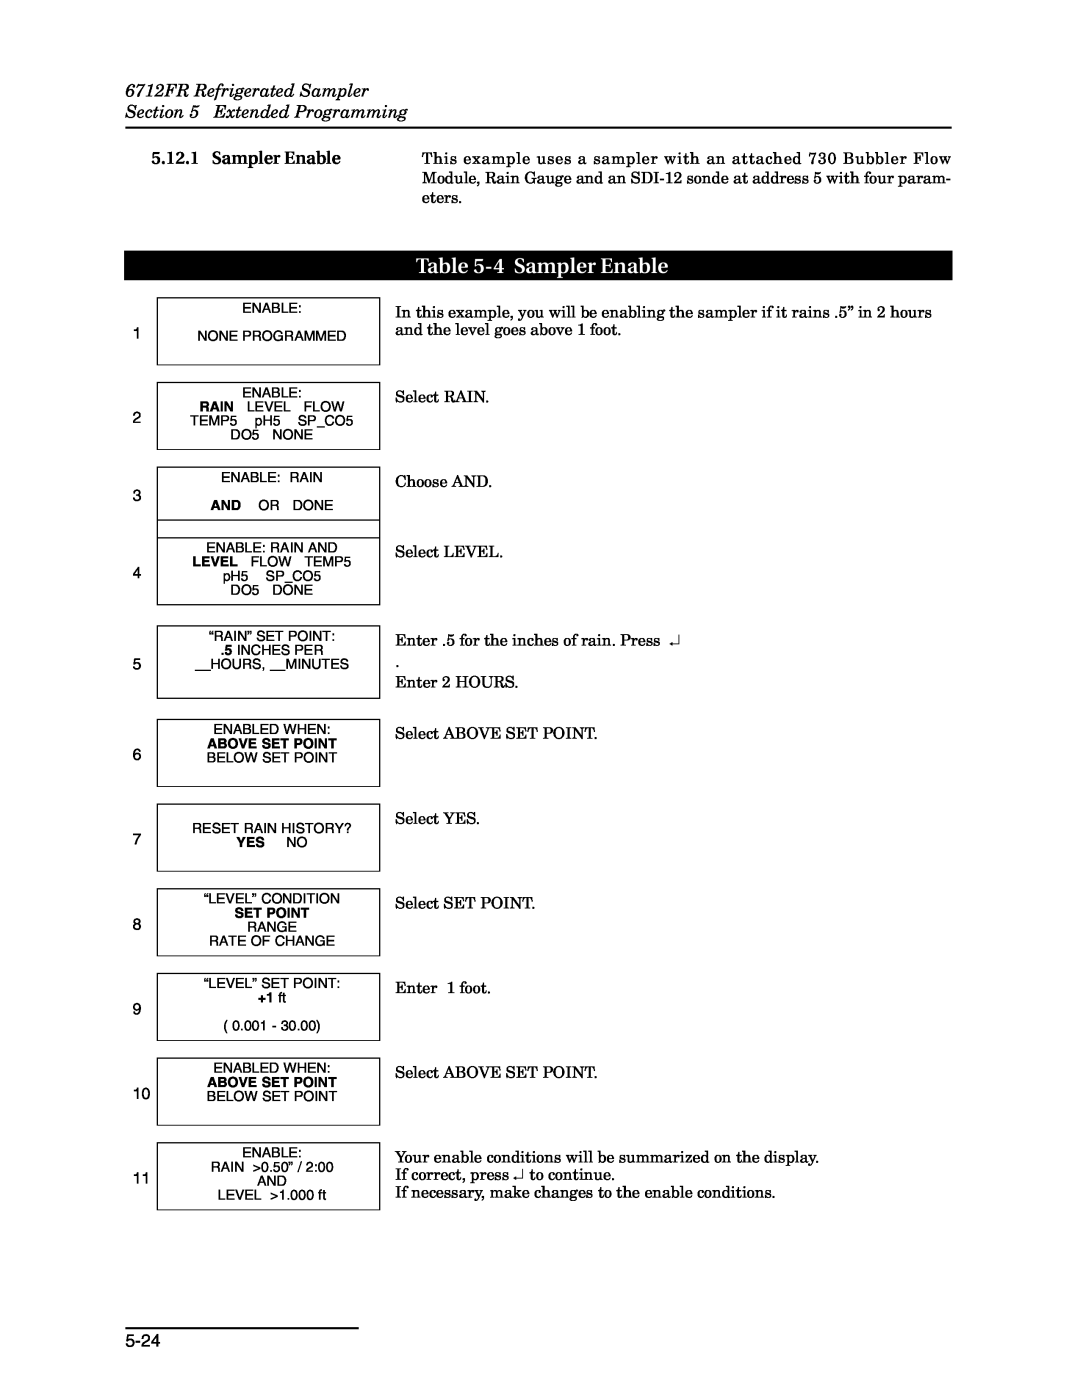 Teledyne manual 4 Sampler Enable, 6712FR Refrigerated Sampler, Section, Extended Programming, 5.12.1, 5-24 